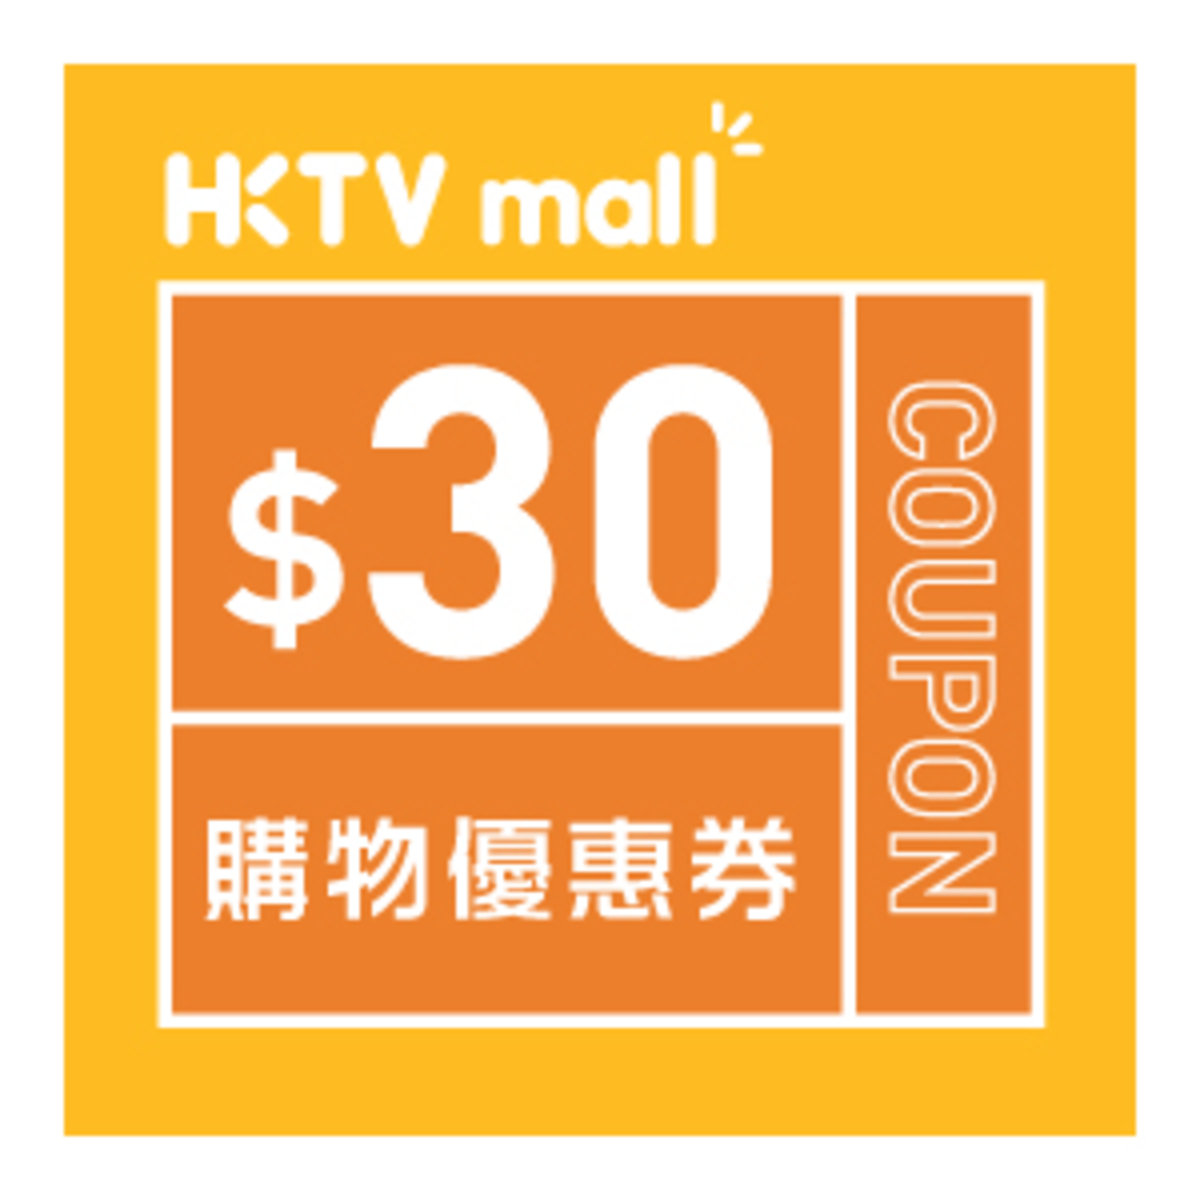 HKTVmall $30 Coupon Code  [Valid: 2020.03.24 - 2020.04.30]